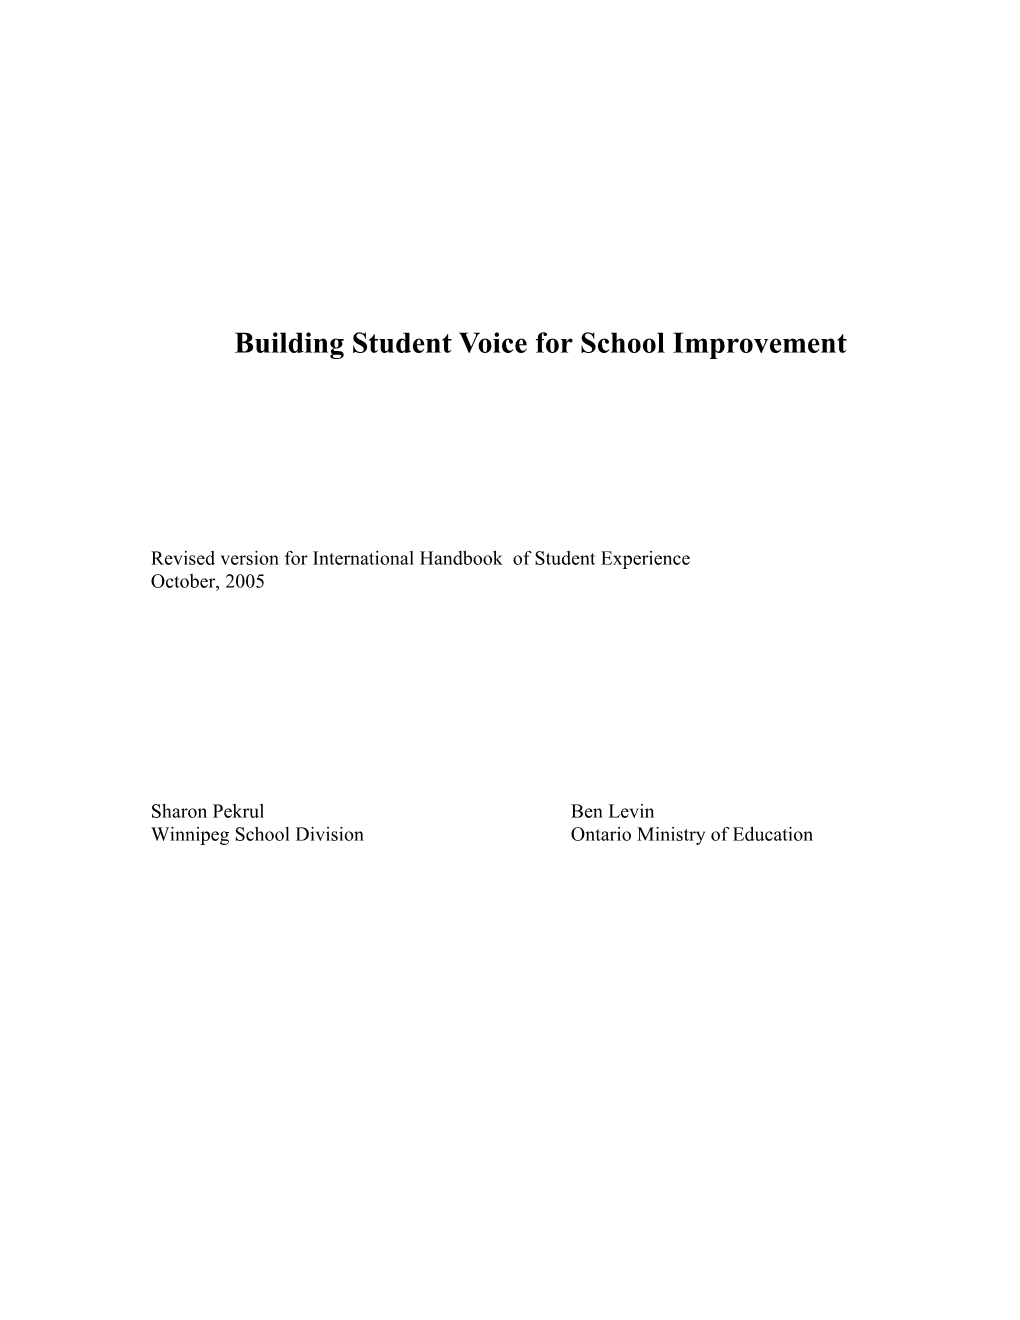 Student Voice and School Improvement